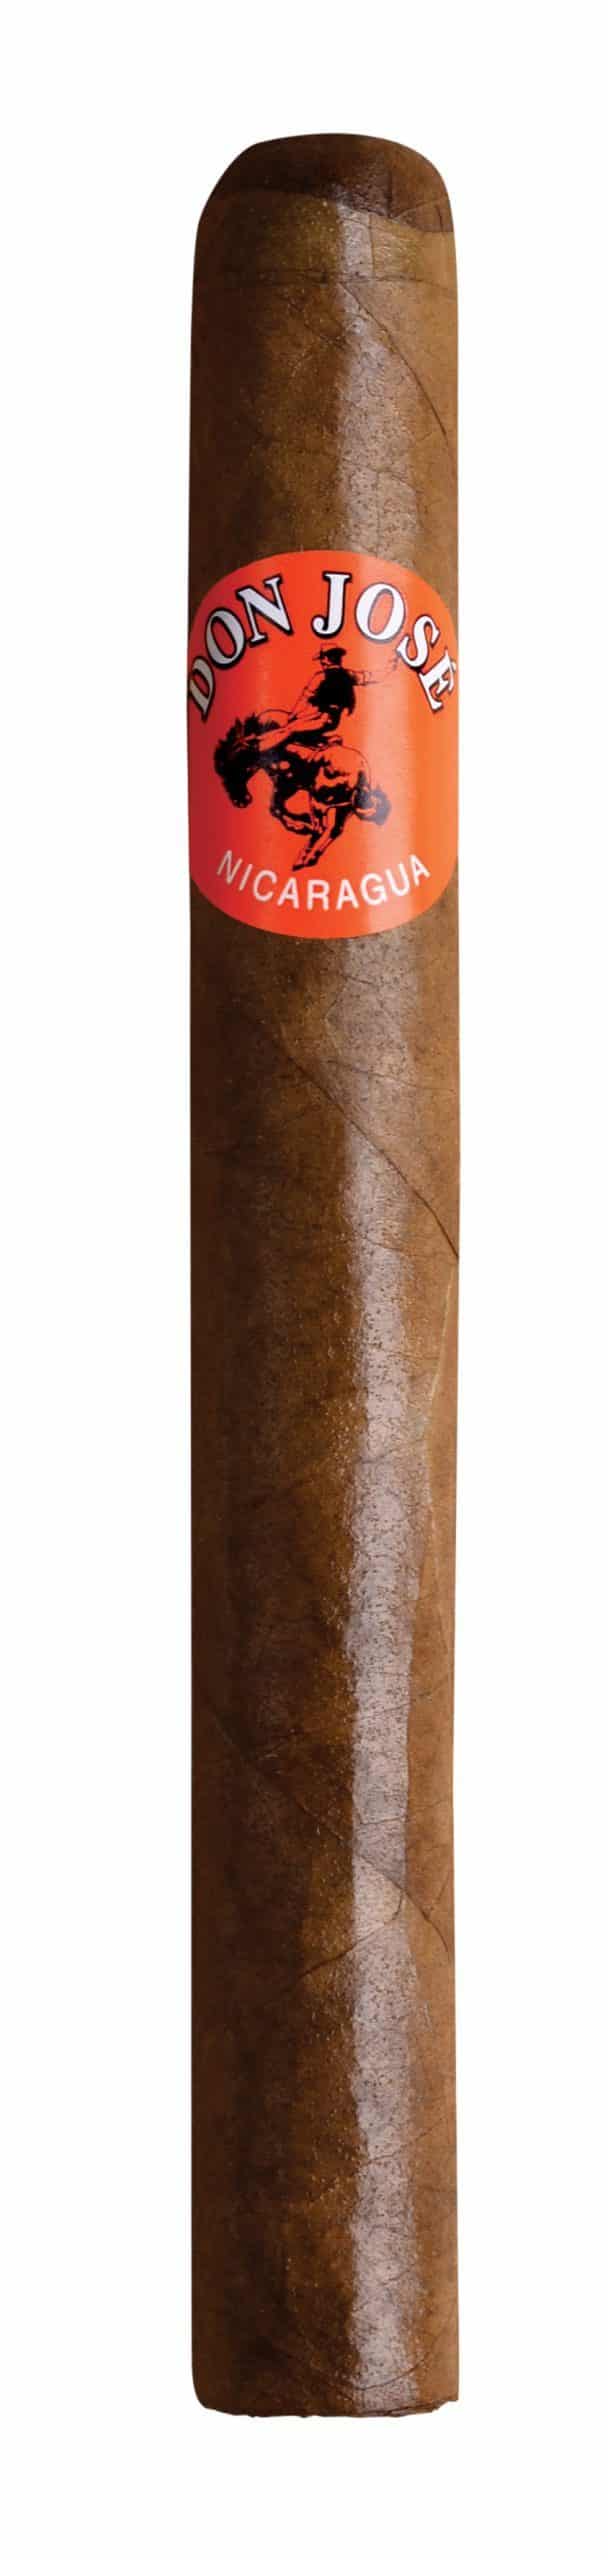 don jose granada natural single cigar